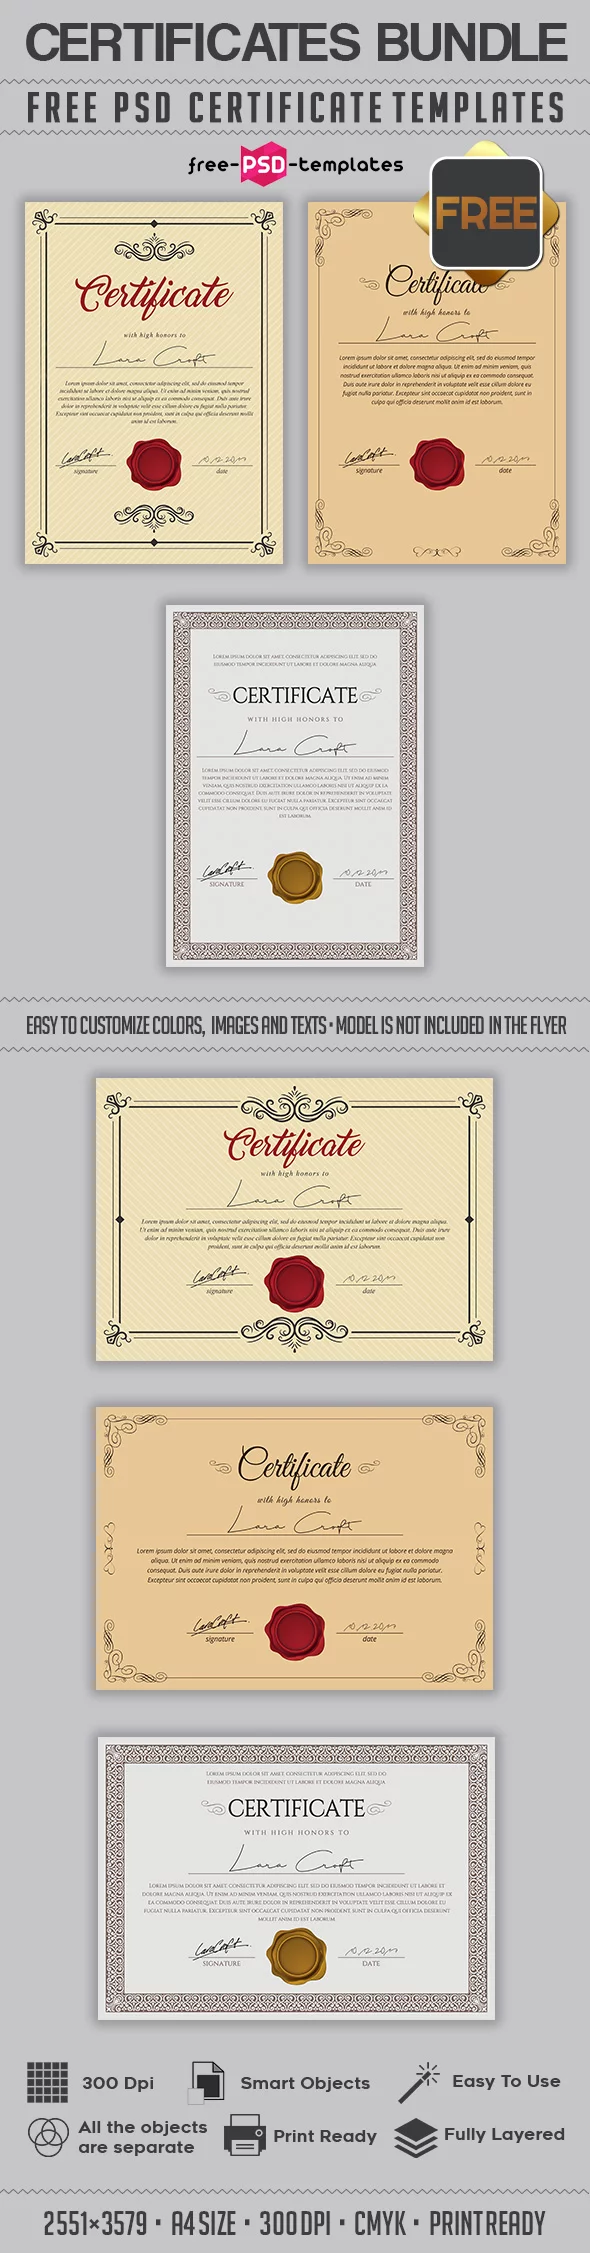 Free Award Certificate Template PSD